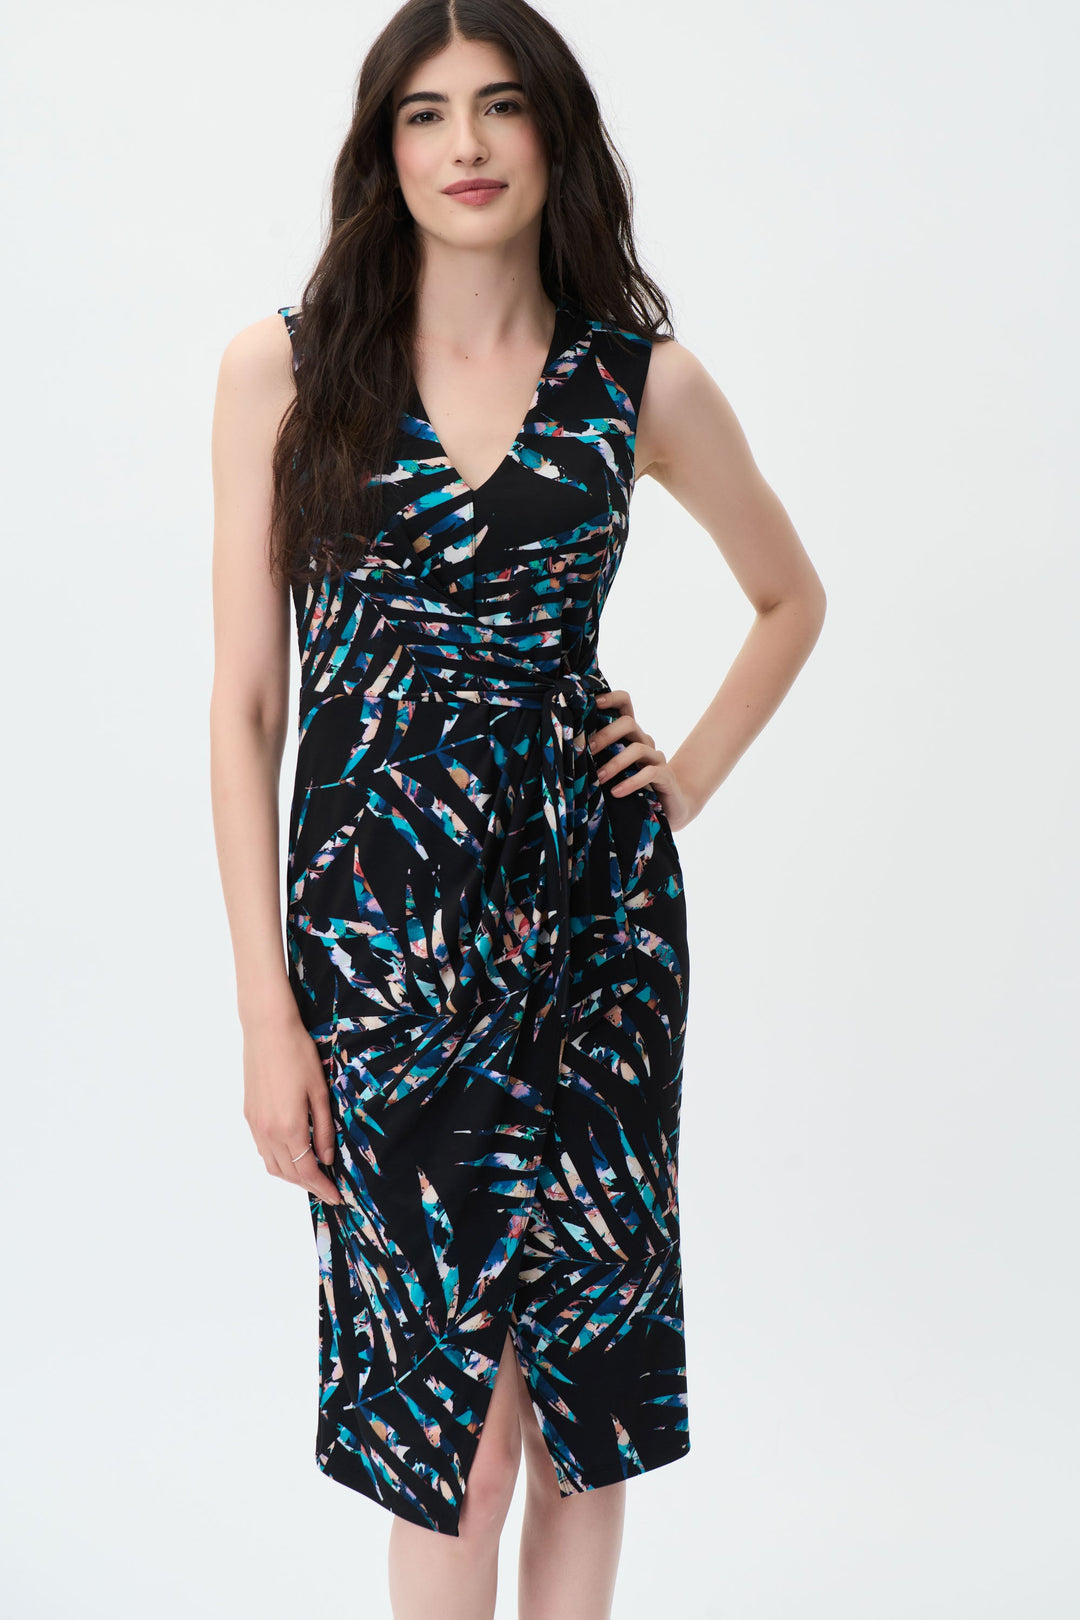 Joseph Ribkoff Dress Style 231108